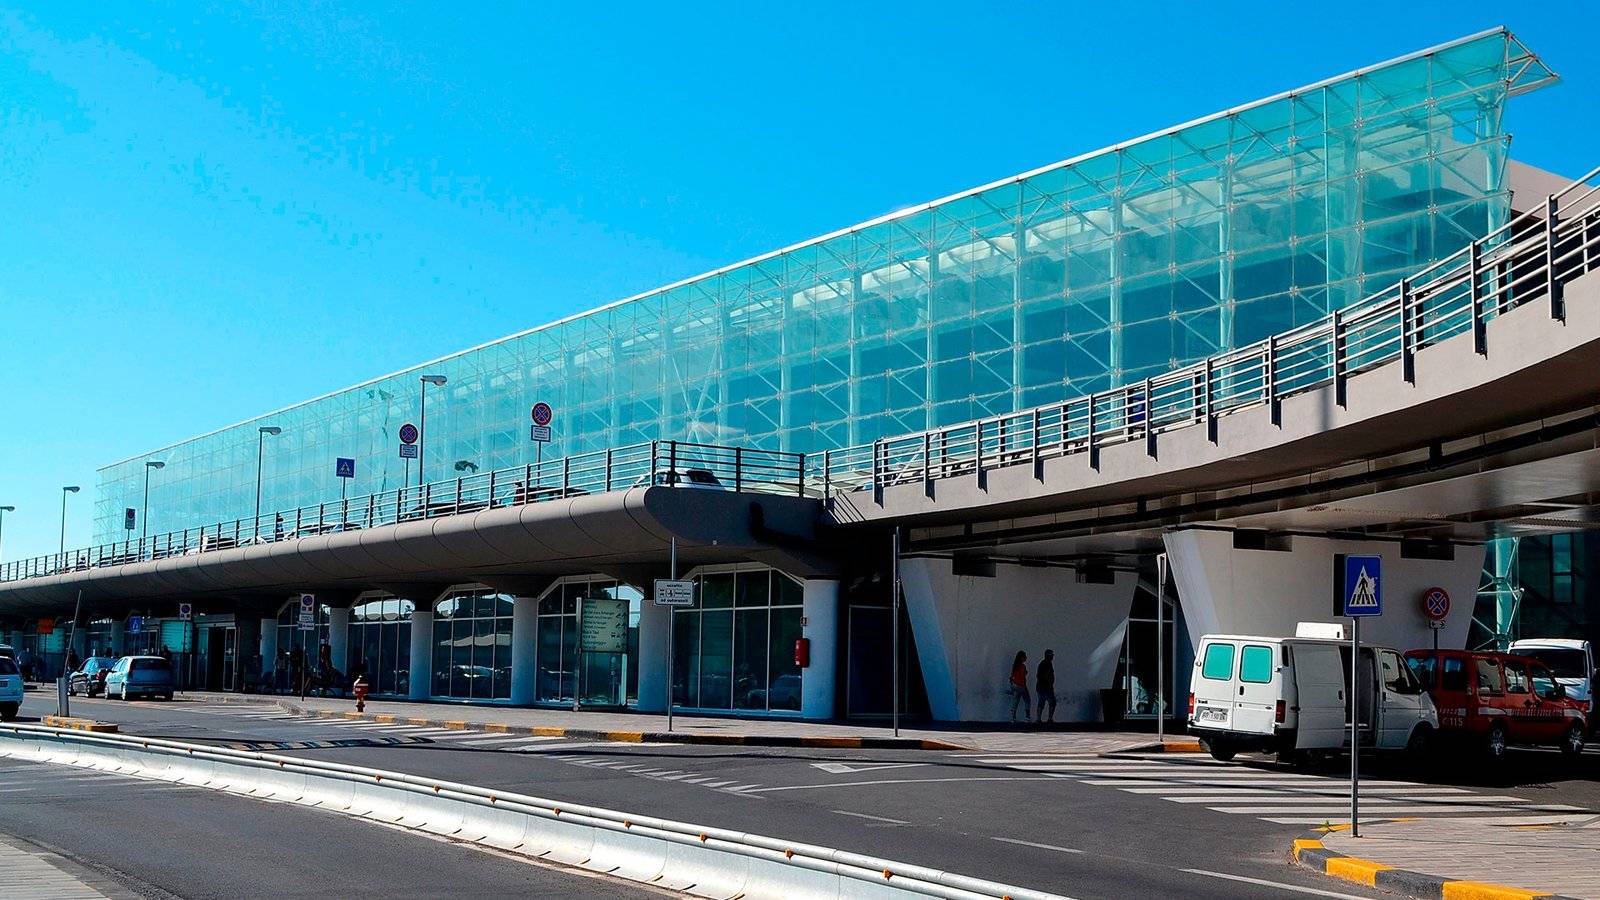 Сицилия аэропорт: список названий международных сицилийских авиалиний